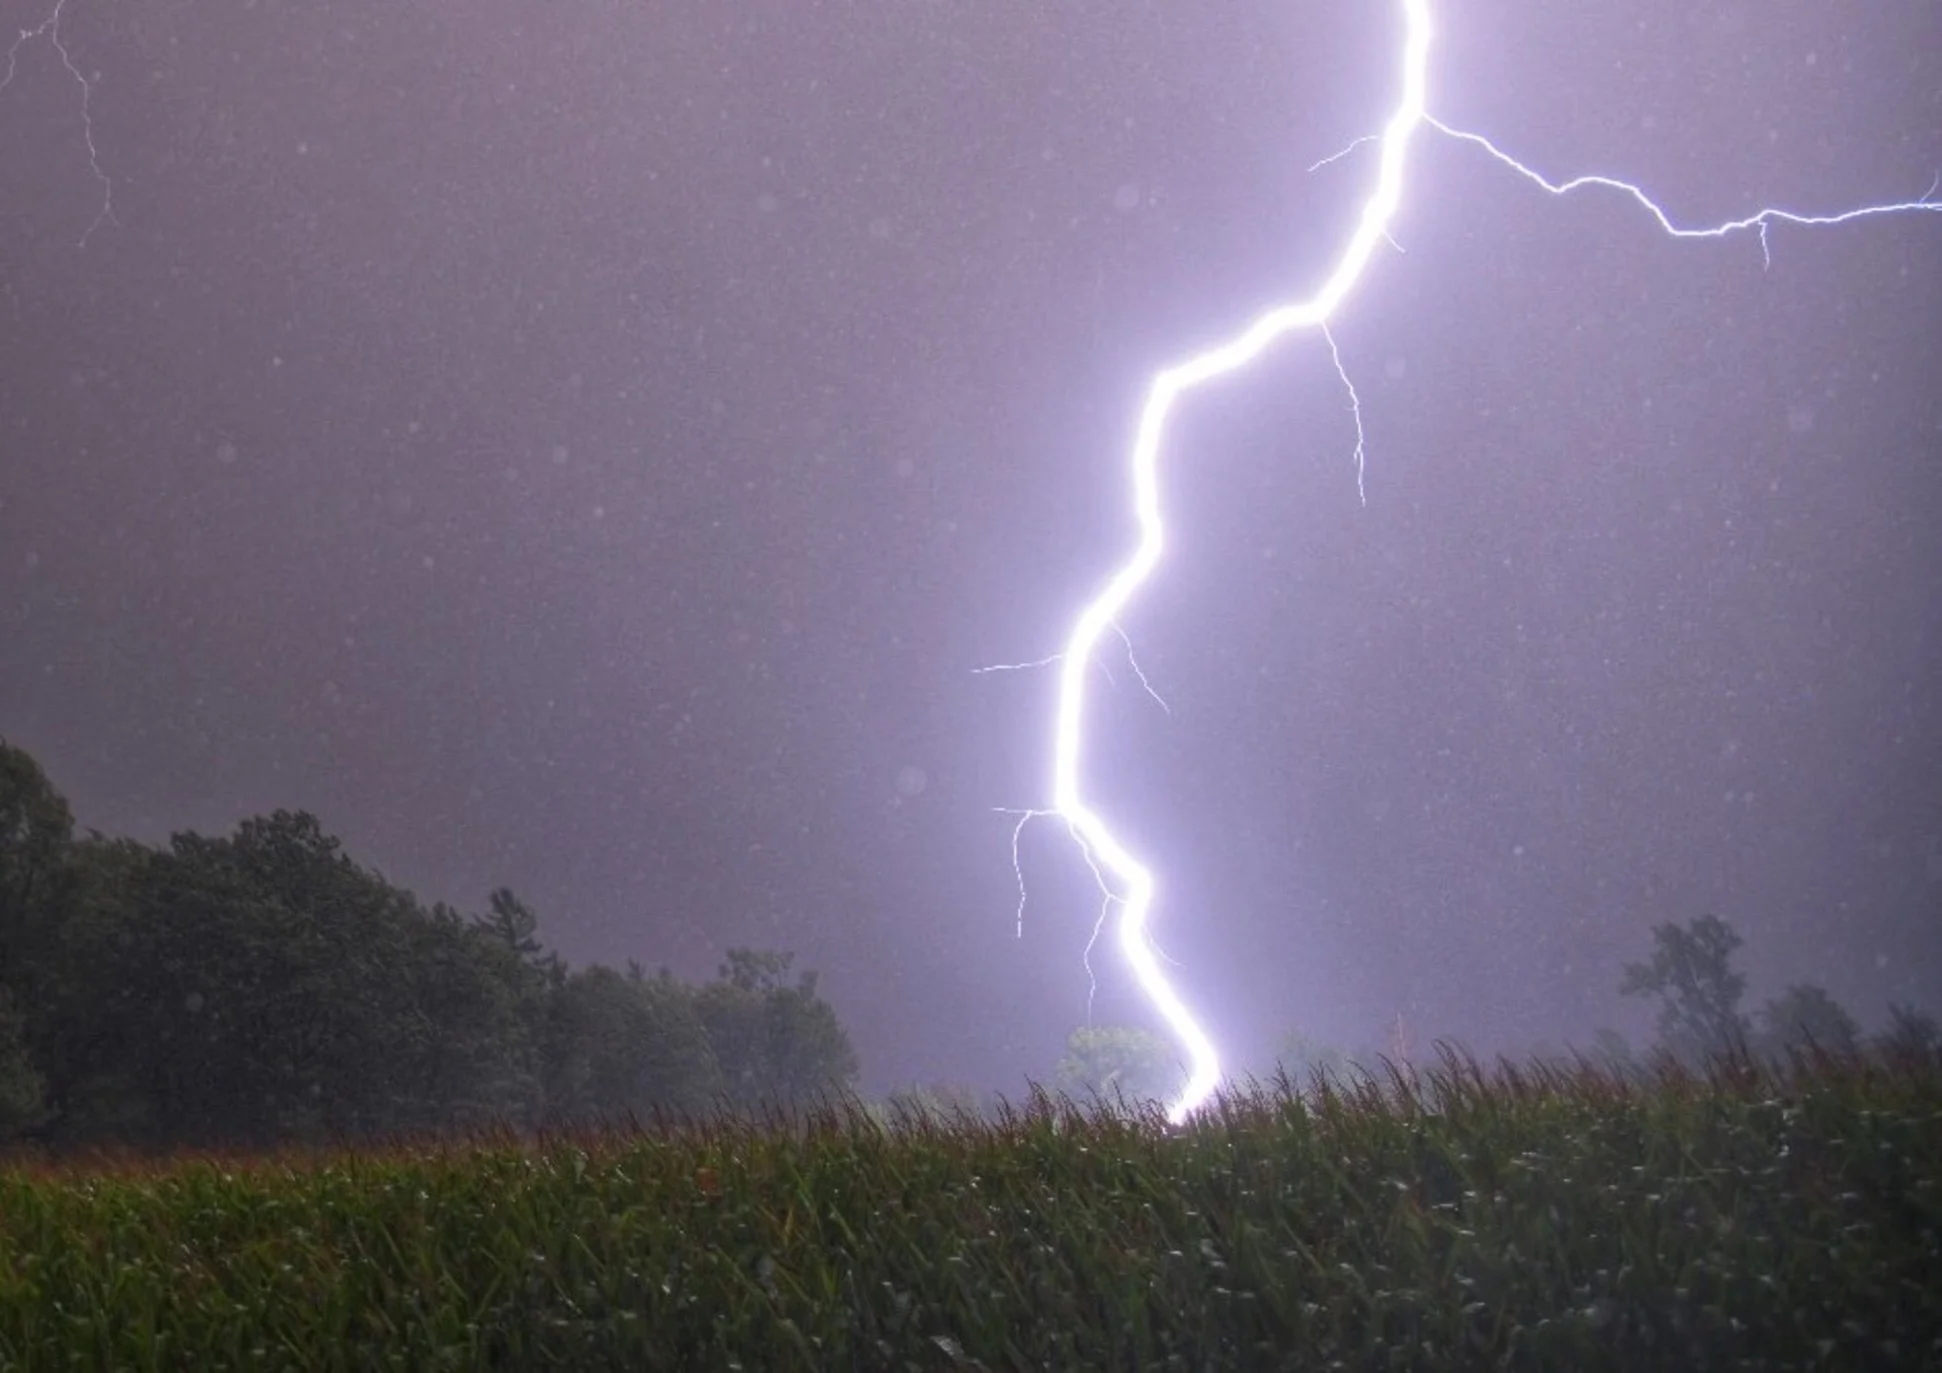 PHOTOS: Abundant lightning as strong storms roll through Ontario